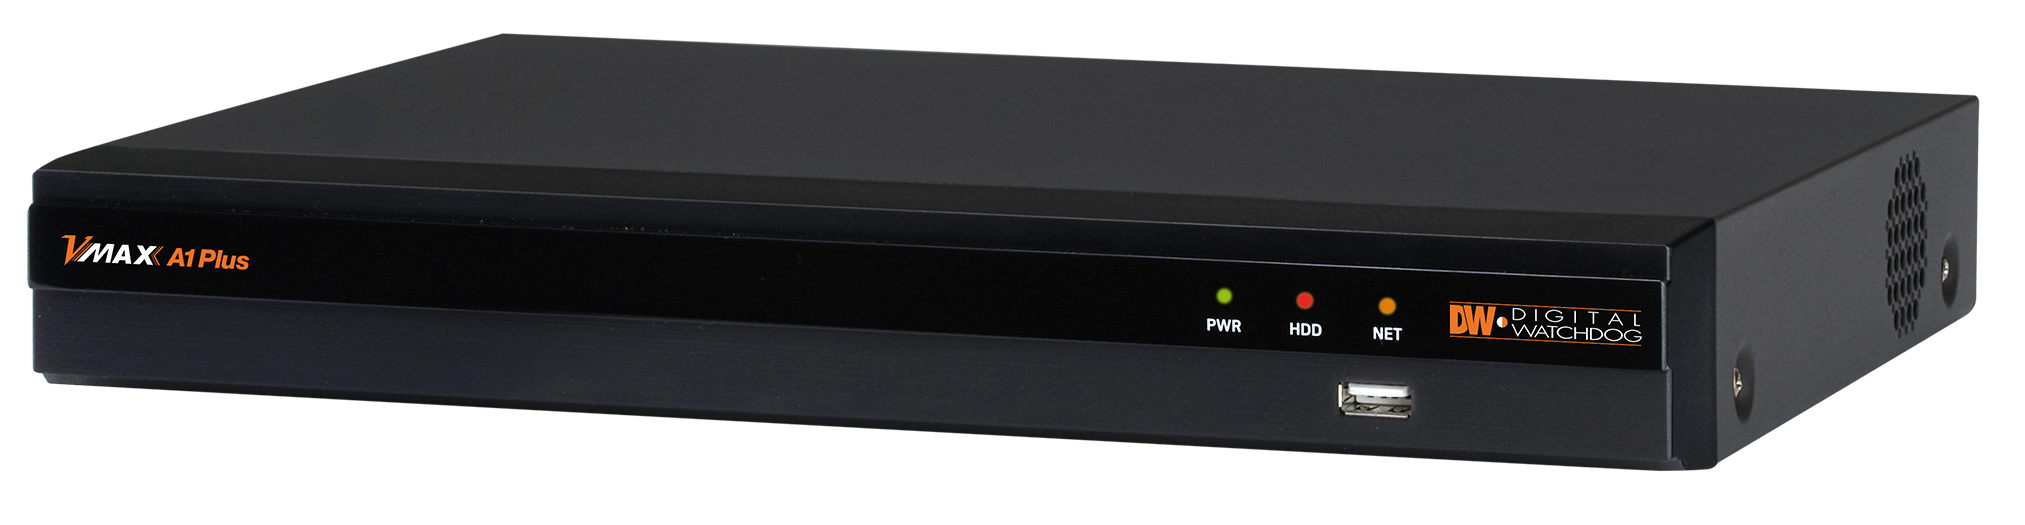 Digital Watchdog DW-VA1P83T  UHDoC - DVR 8ch 8 Channel Universal HD Over Coax DVR